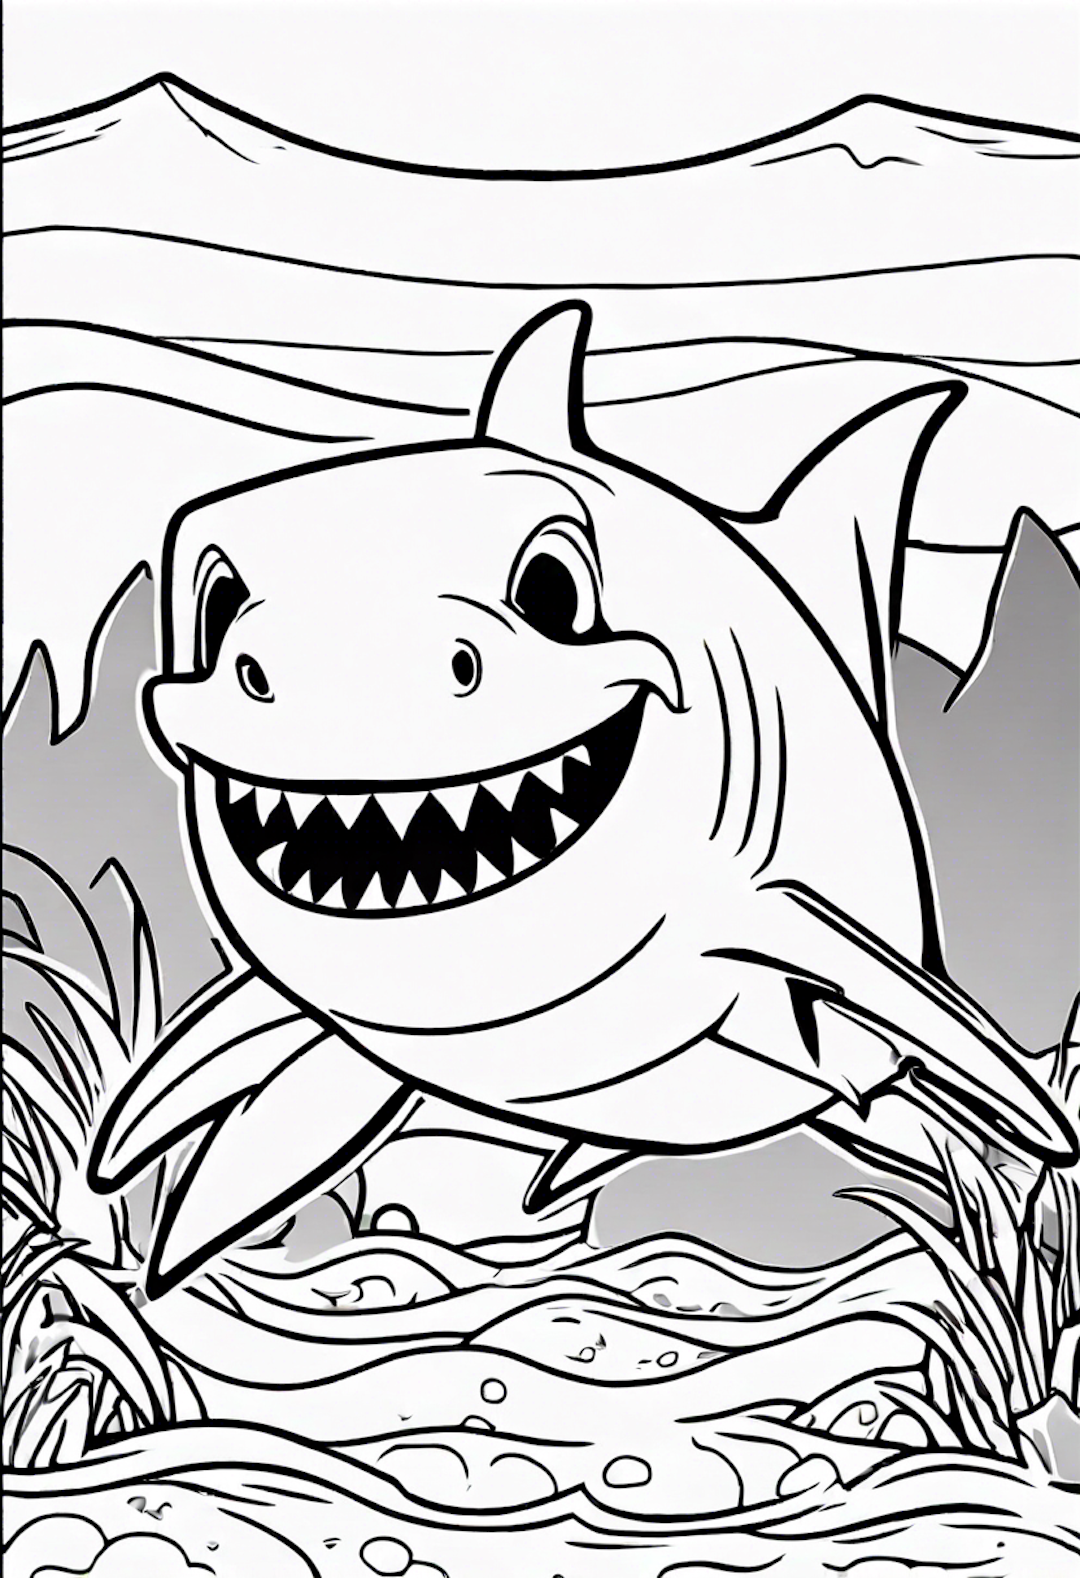 A Cartoon Shark Eating